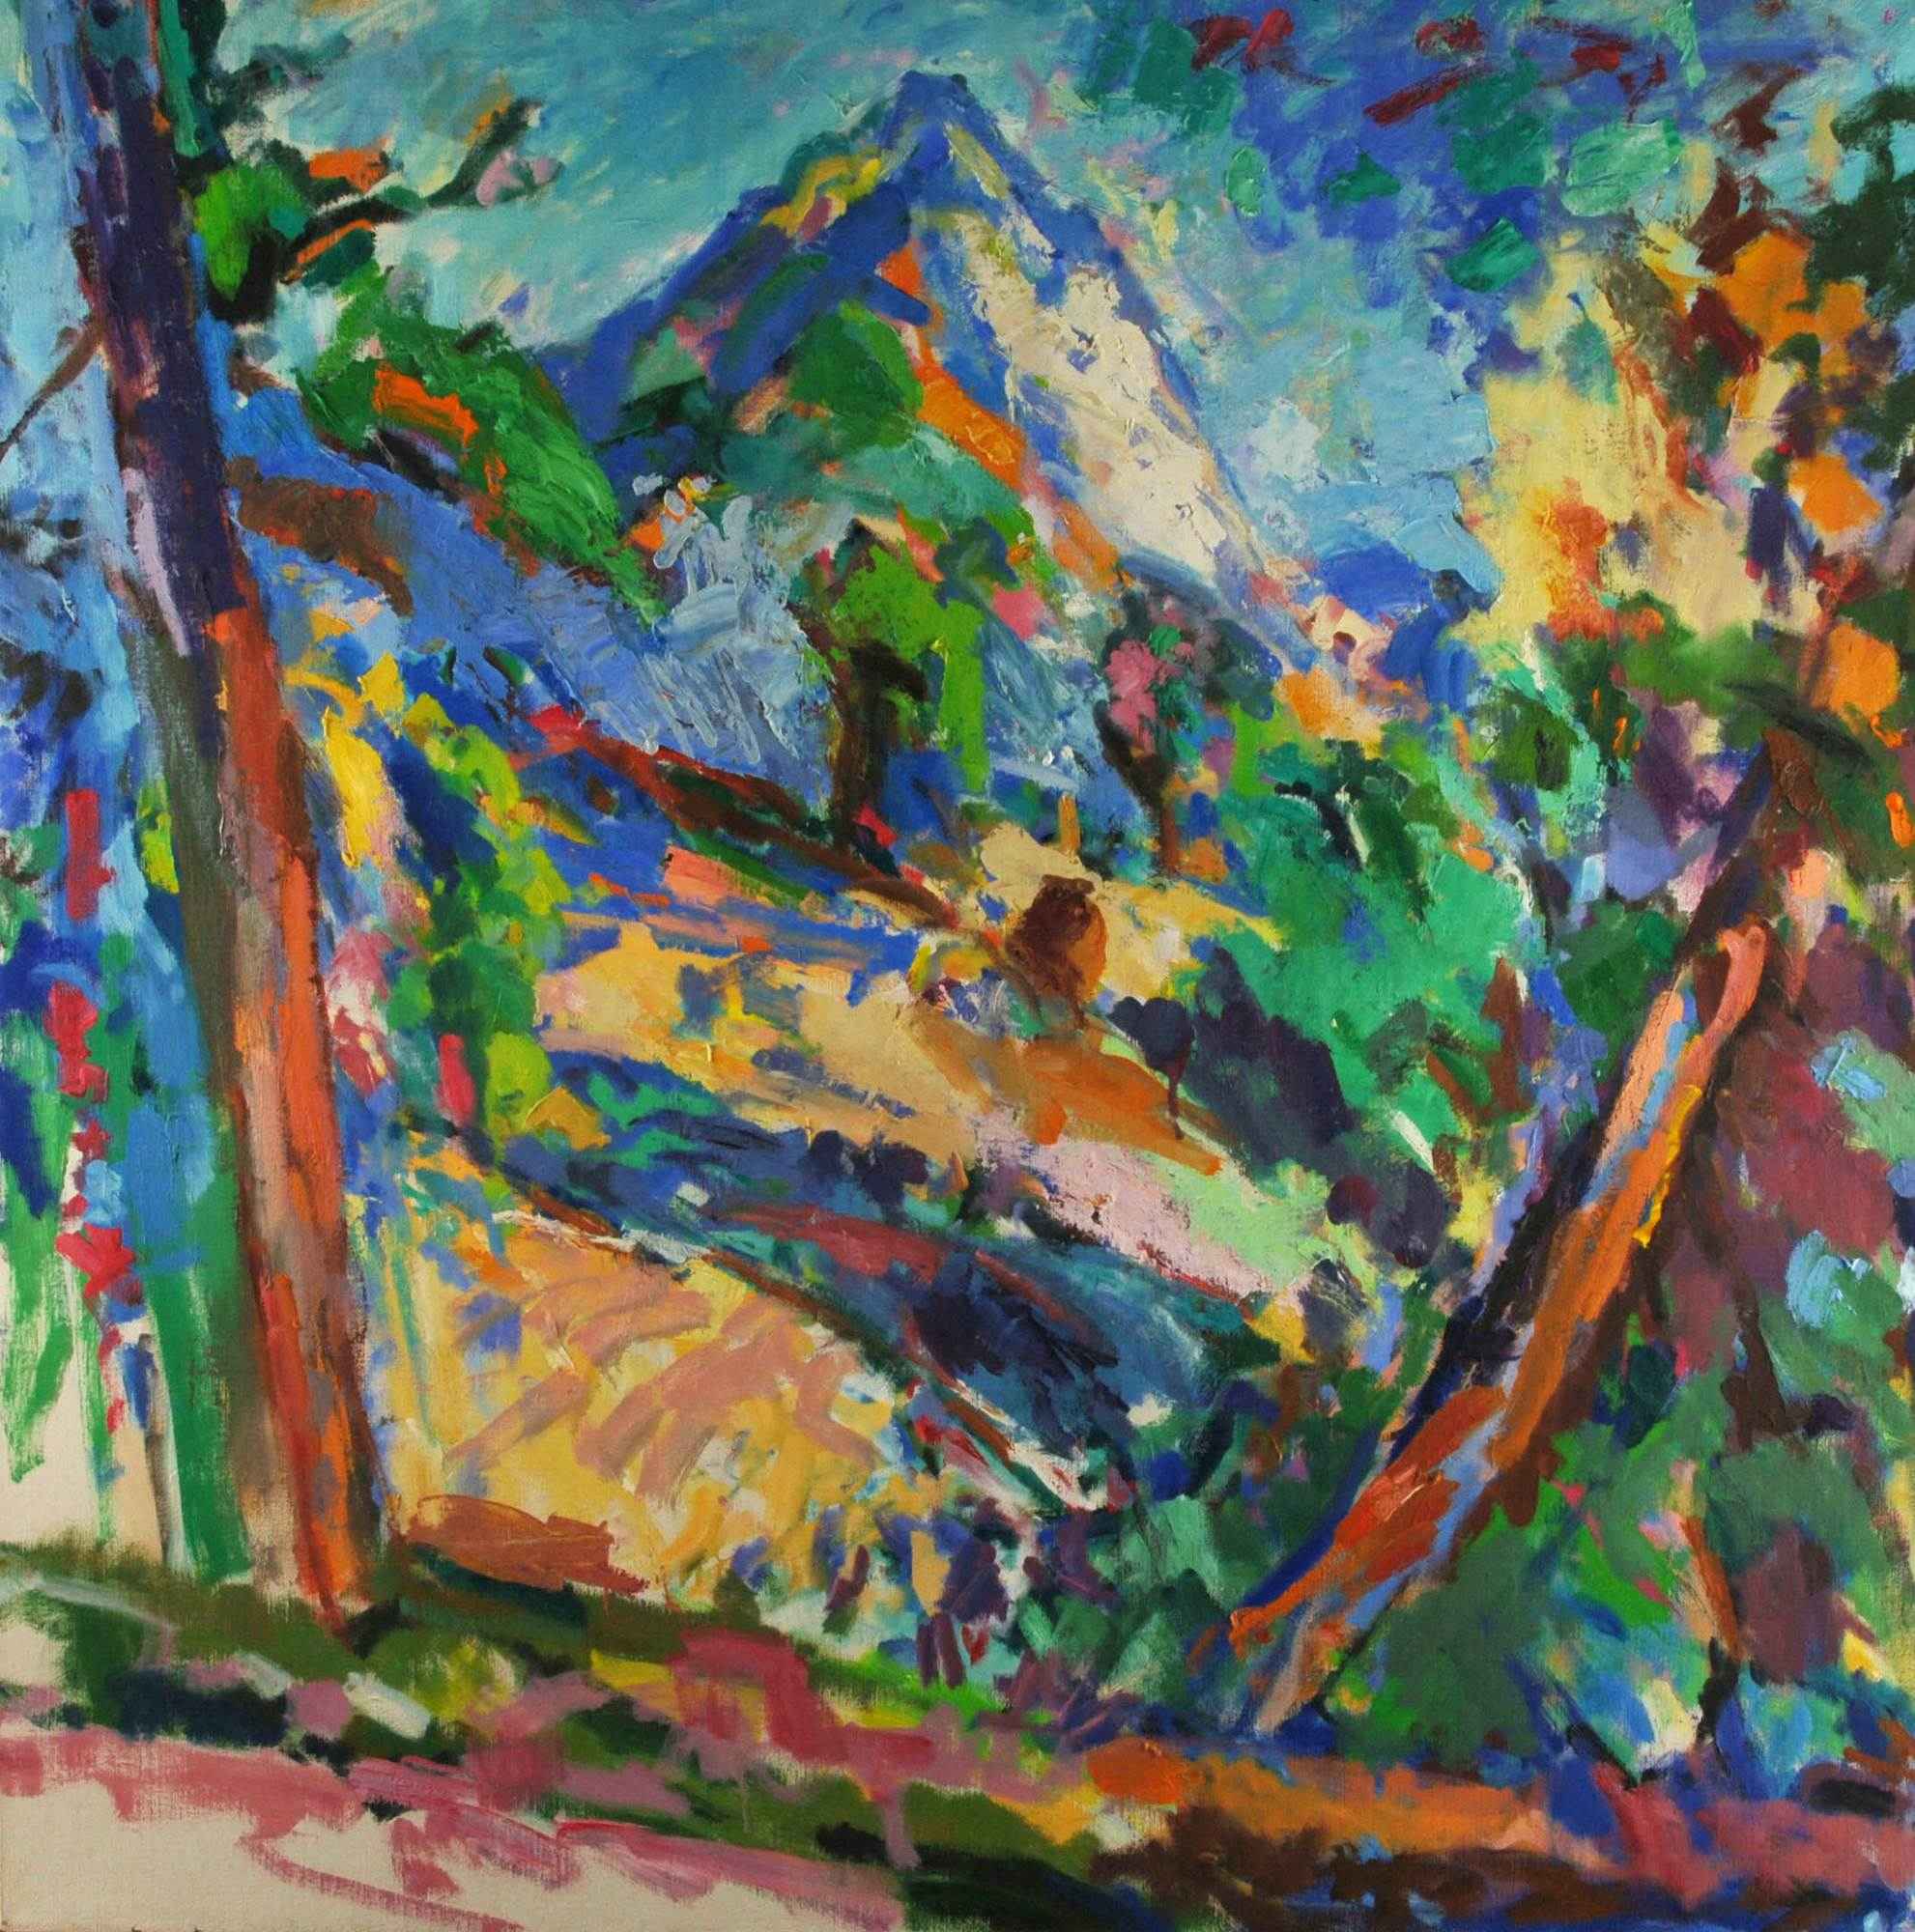 Painting (View of Sierra Mountain Peak framed by Trees)